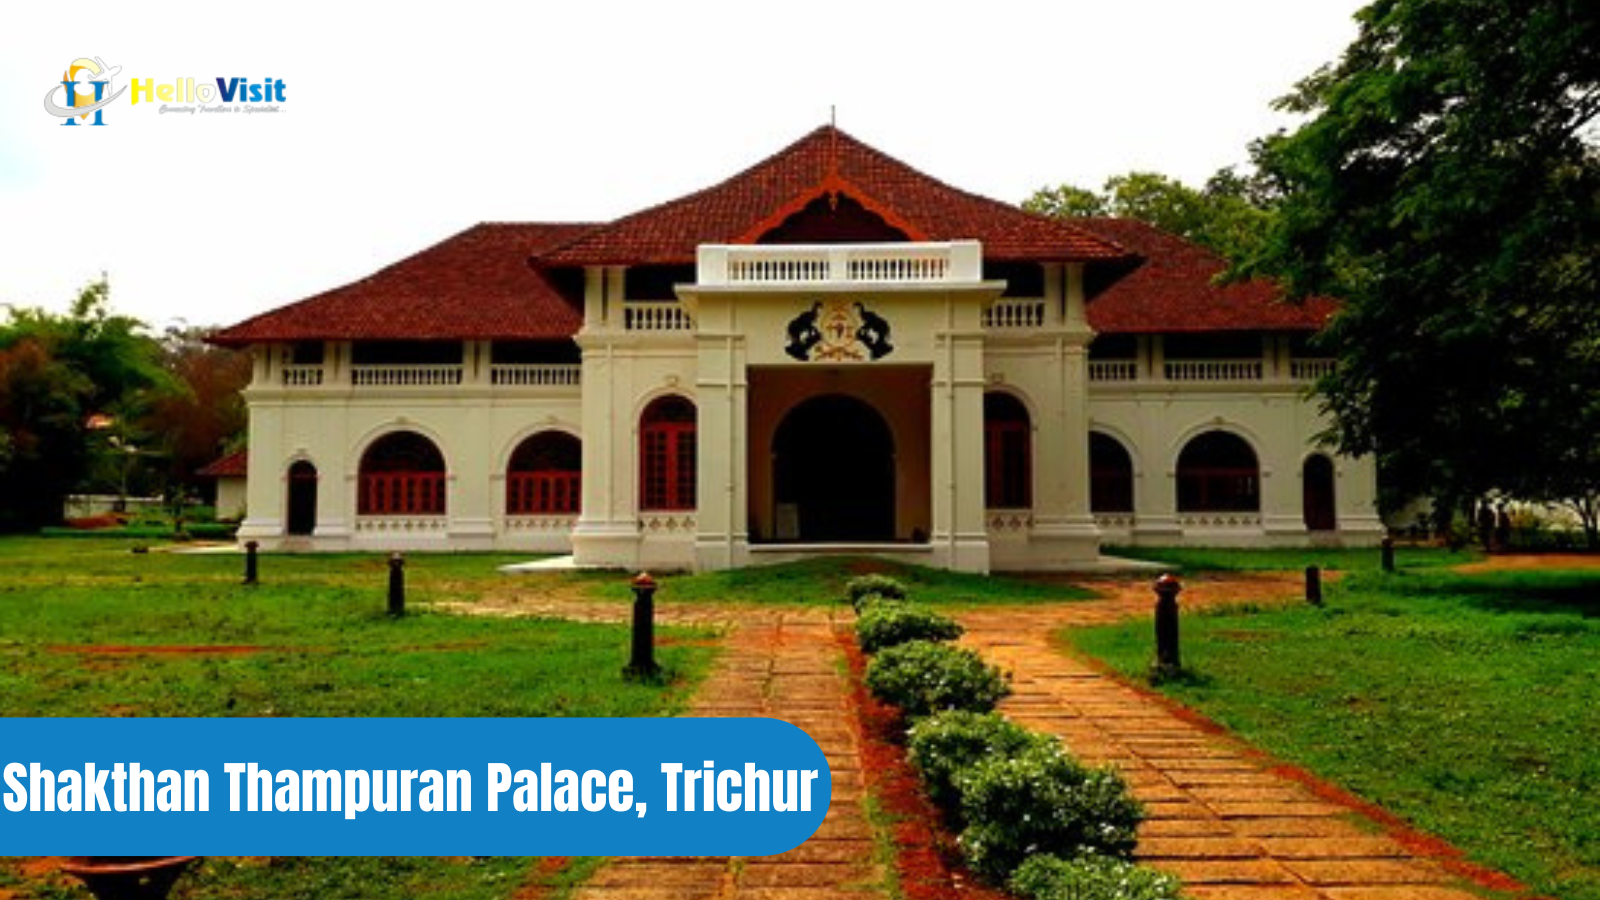 Shakthan Thampuran Palace, Trichur